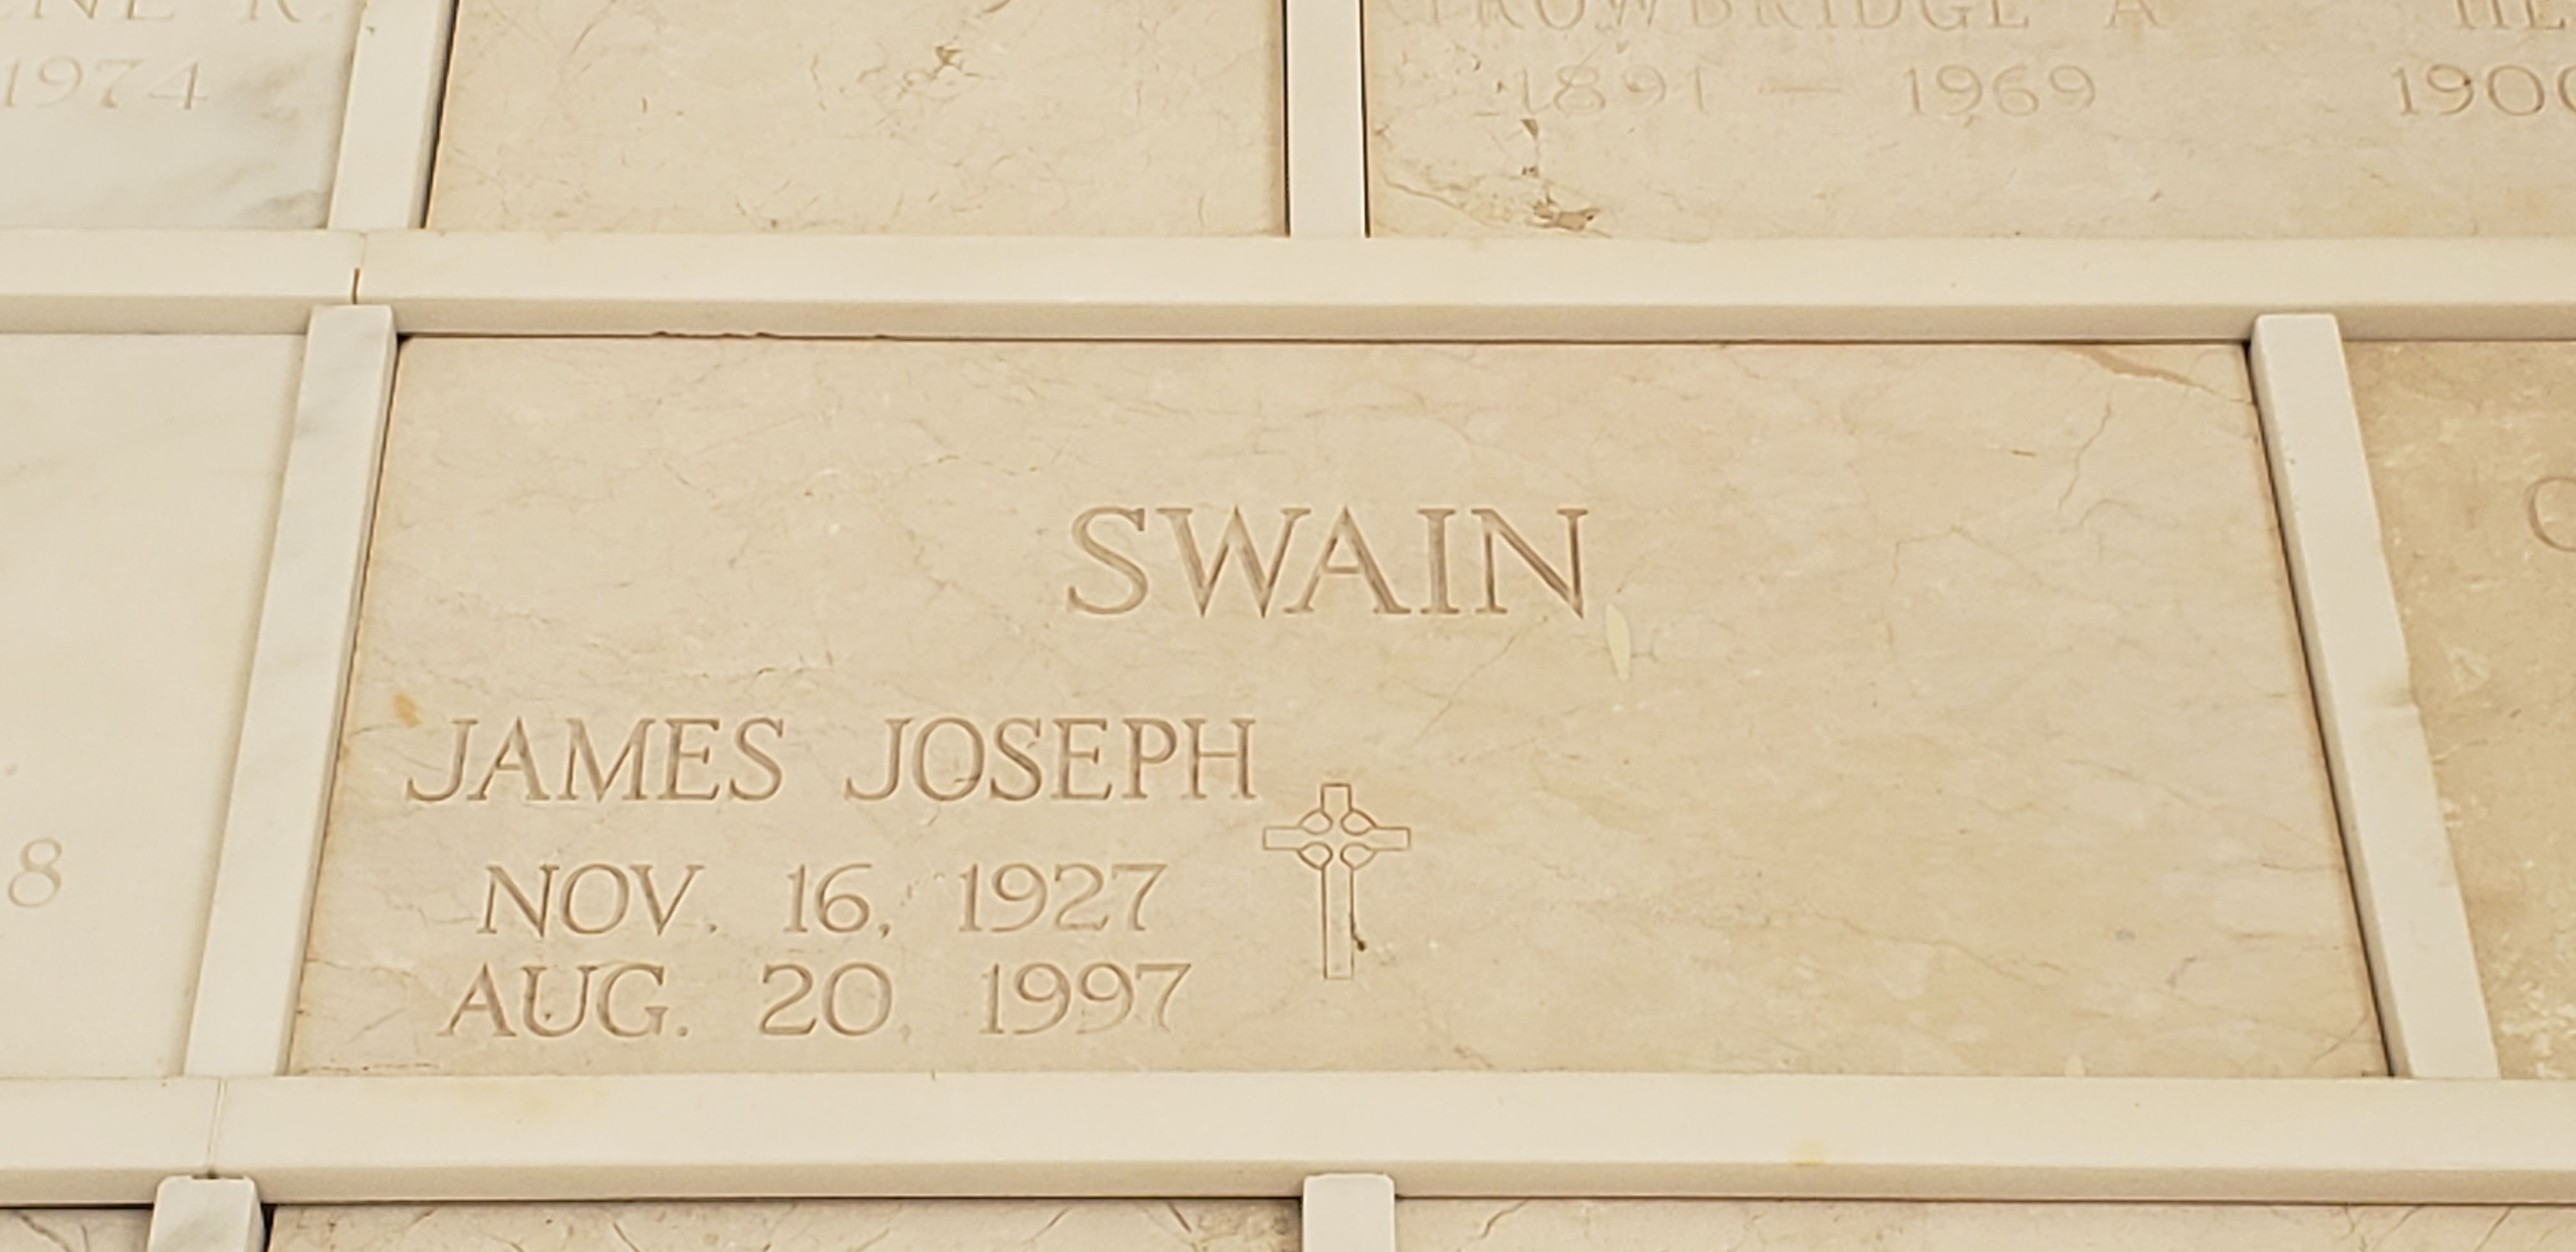 James Joseph Swain